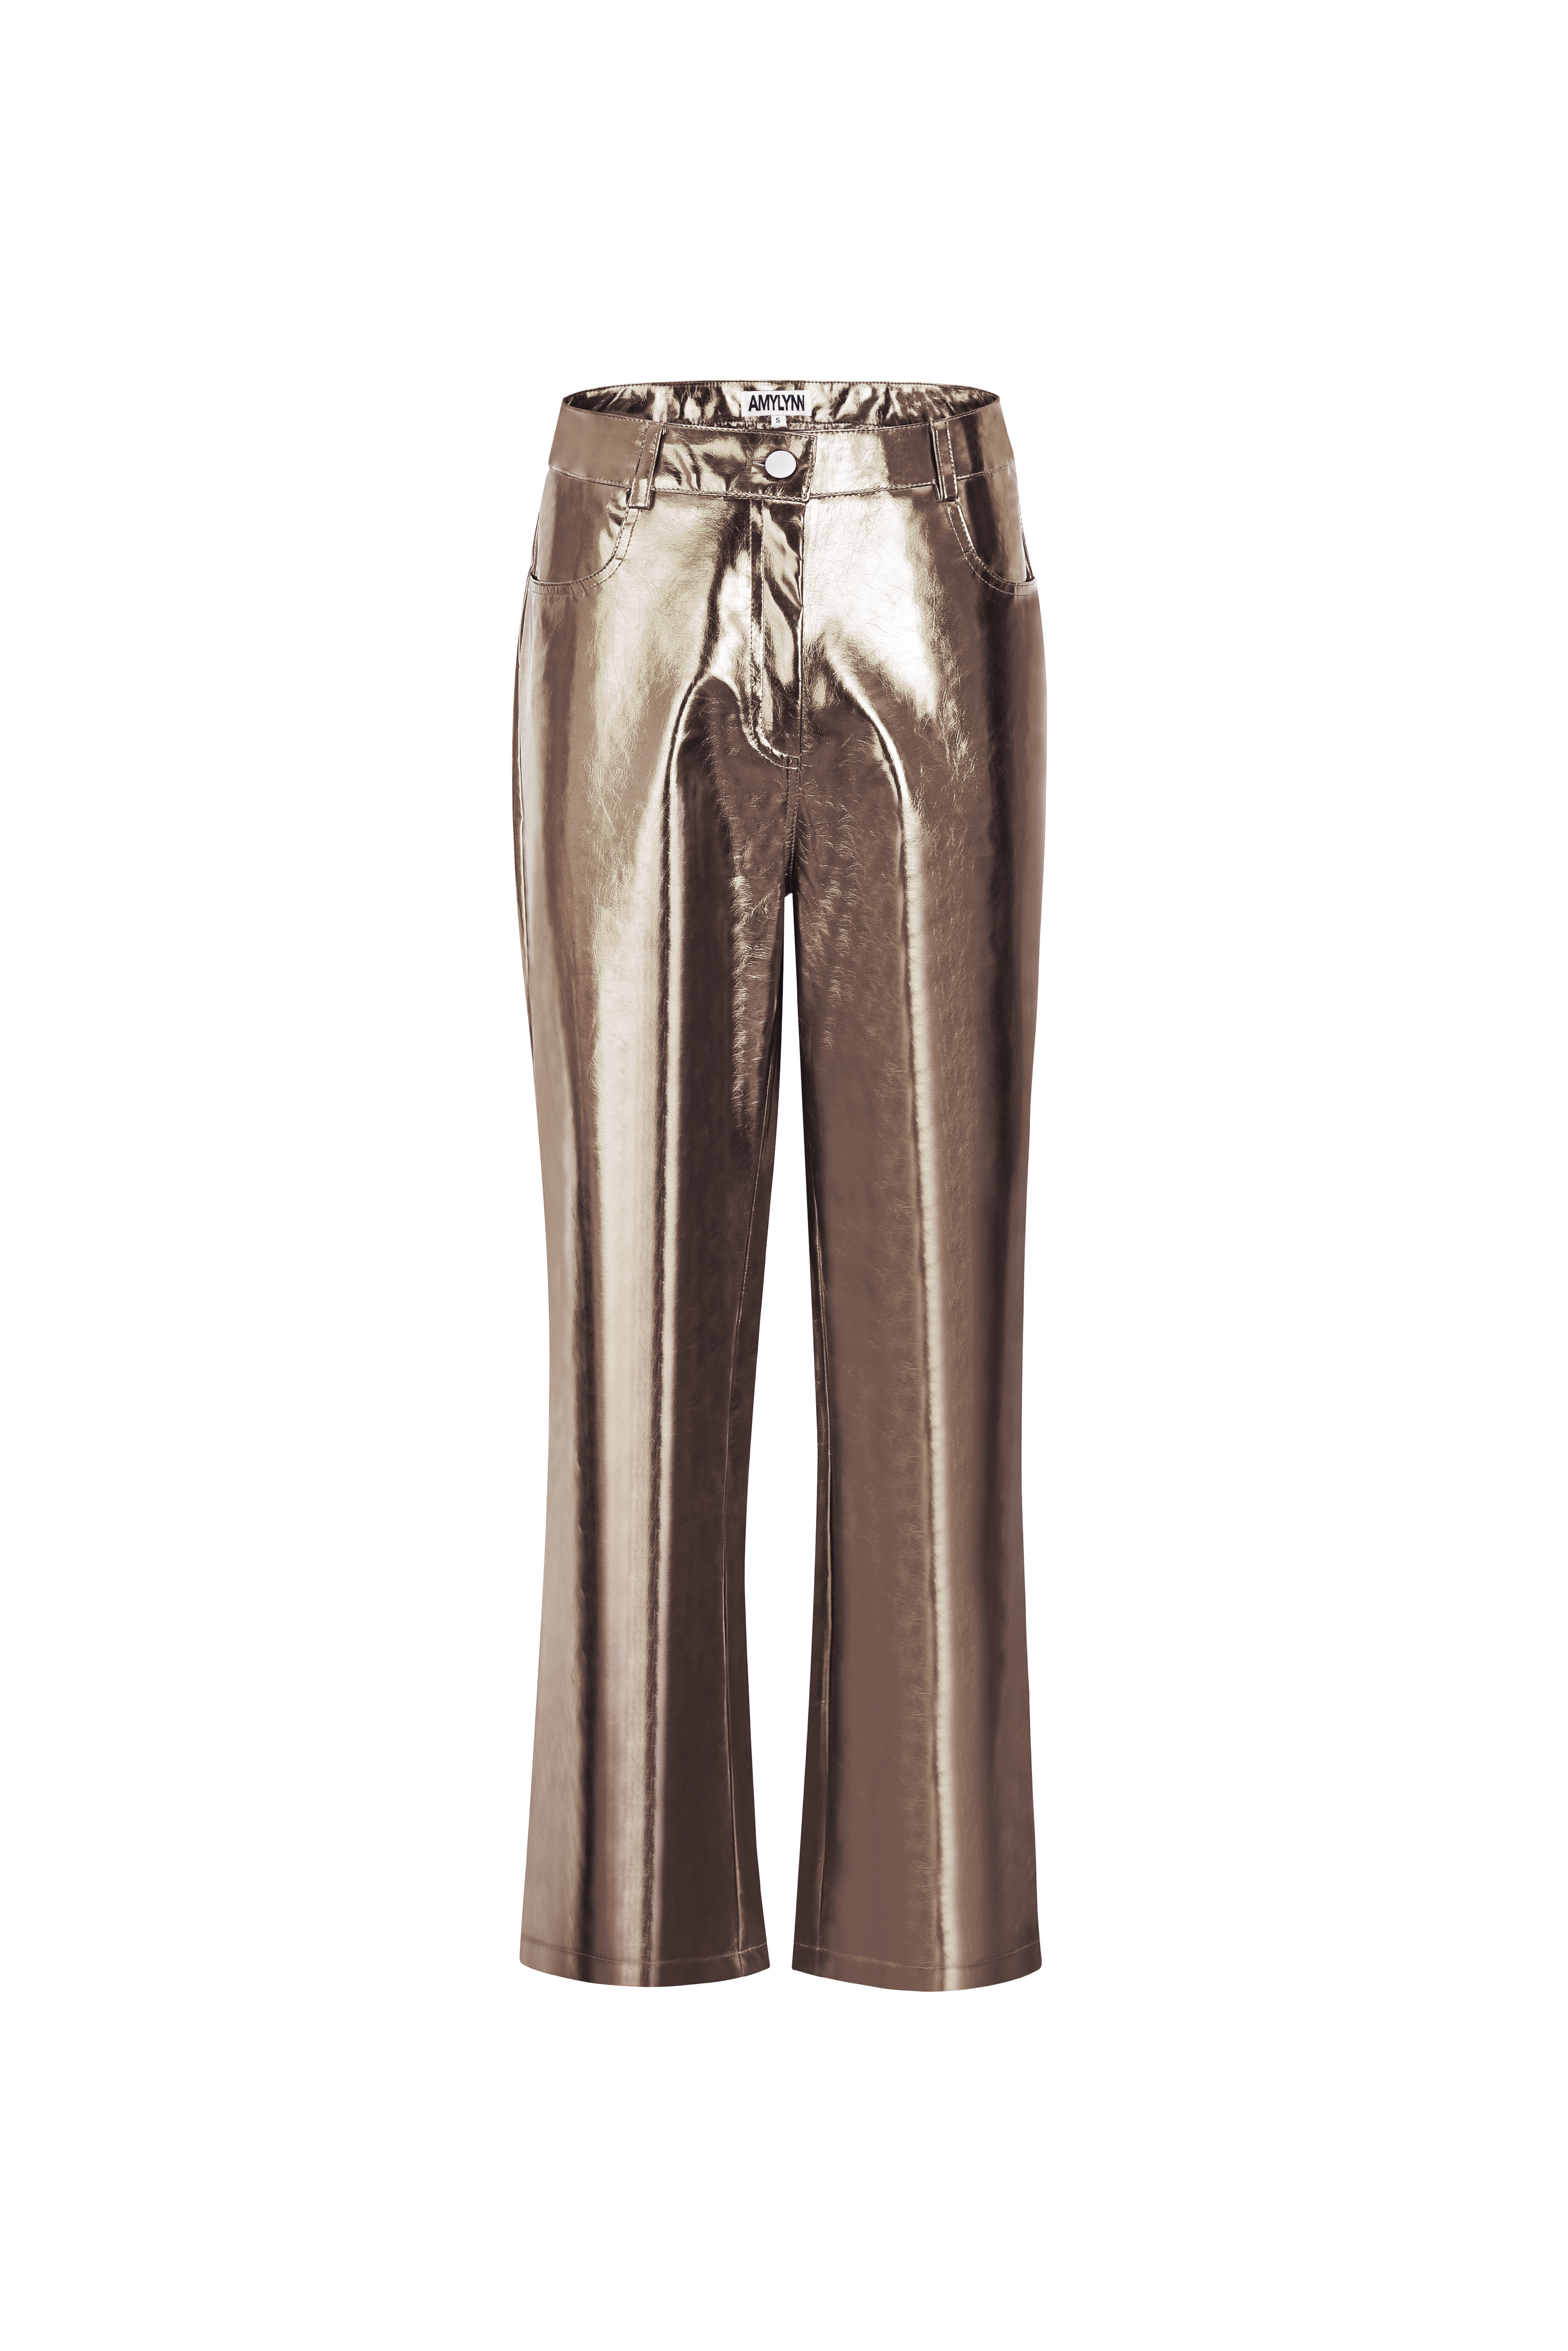 Lupe Shiny Charcoal Metallic PU High Waisted Straight Leg Trousers